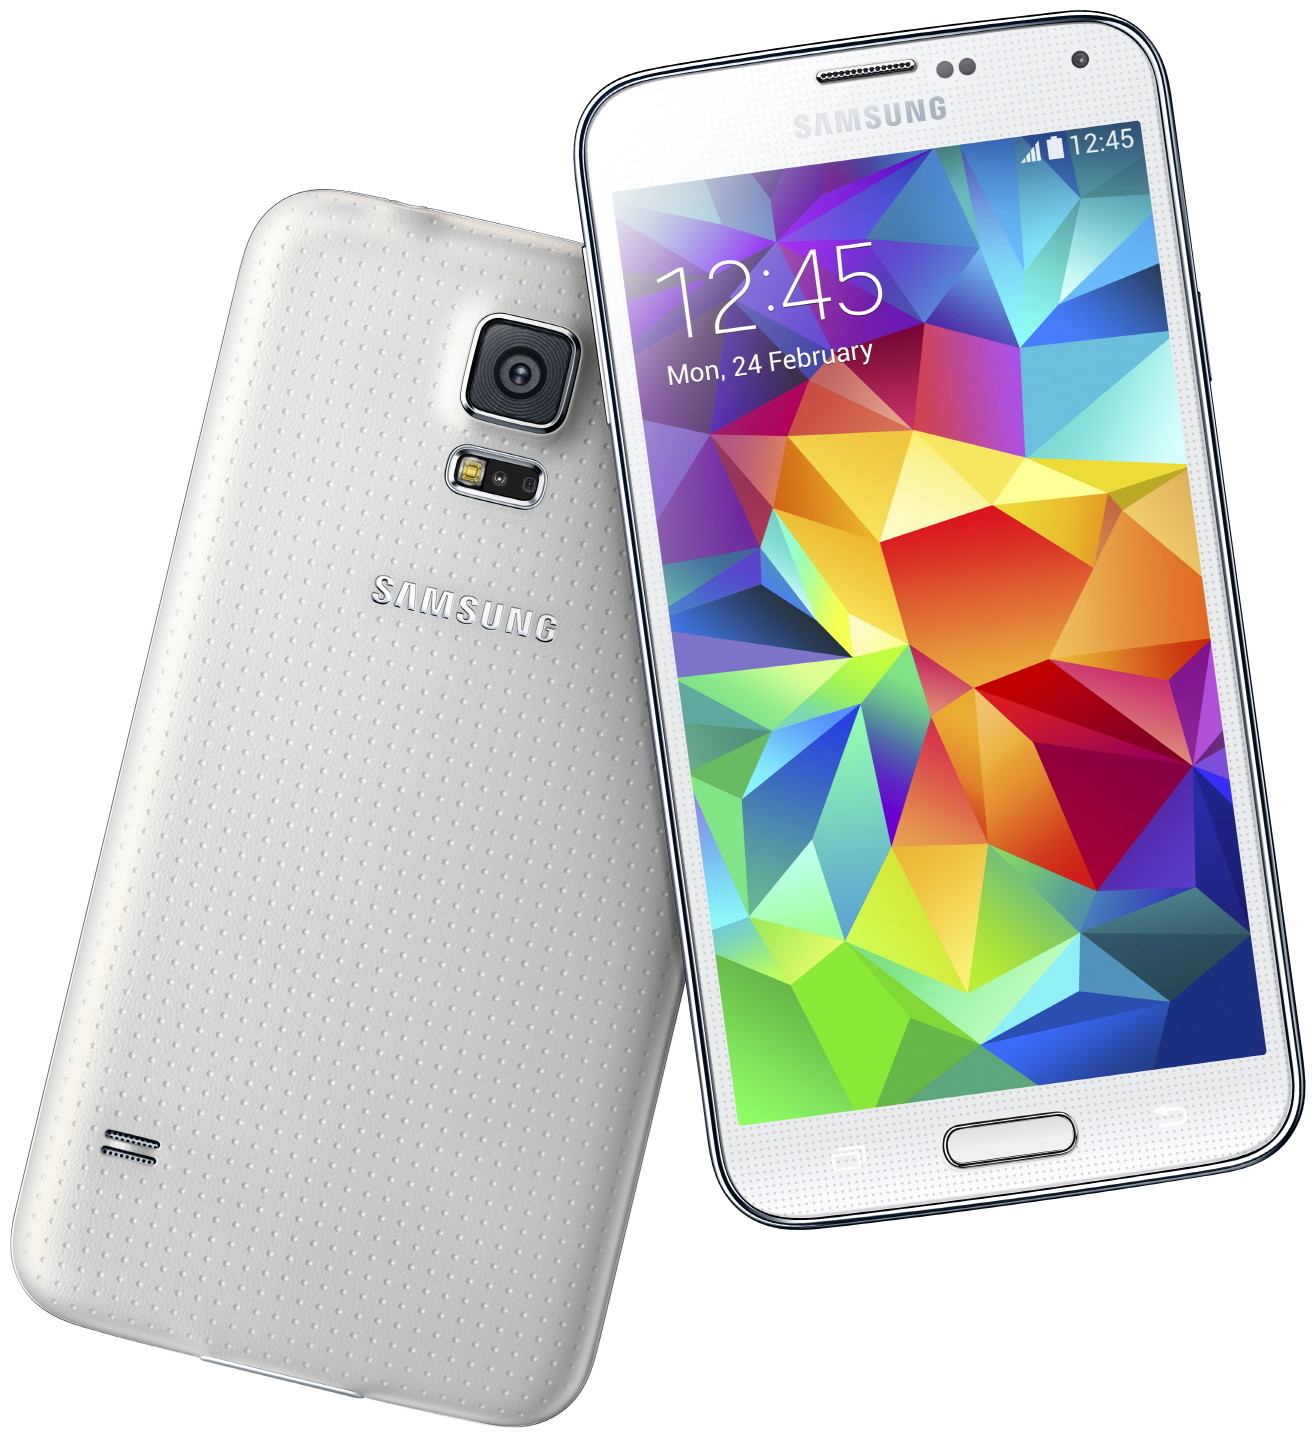 Samsung Galaxy S5 Plus 32GB - and Price -